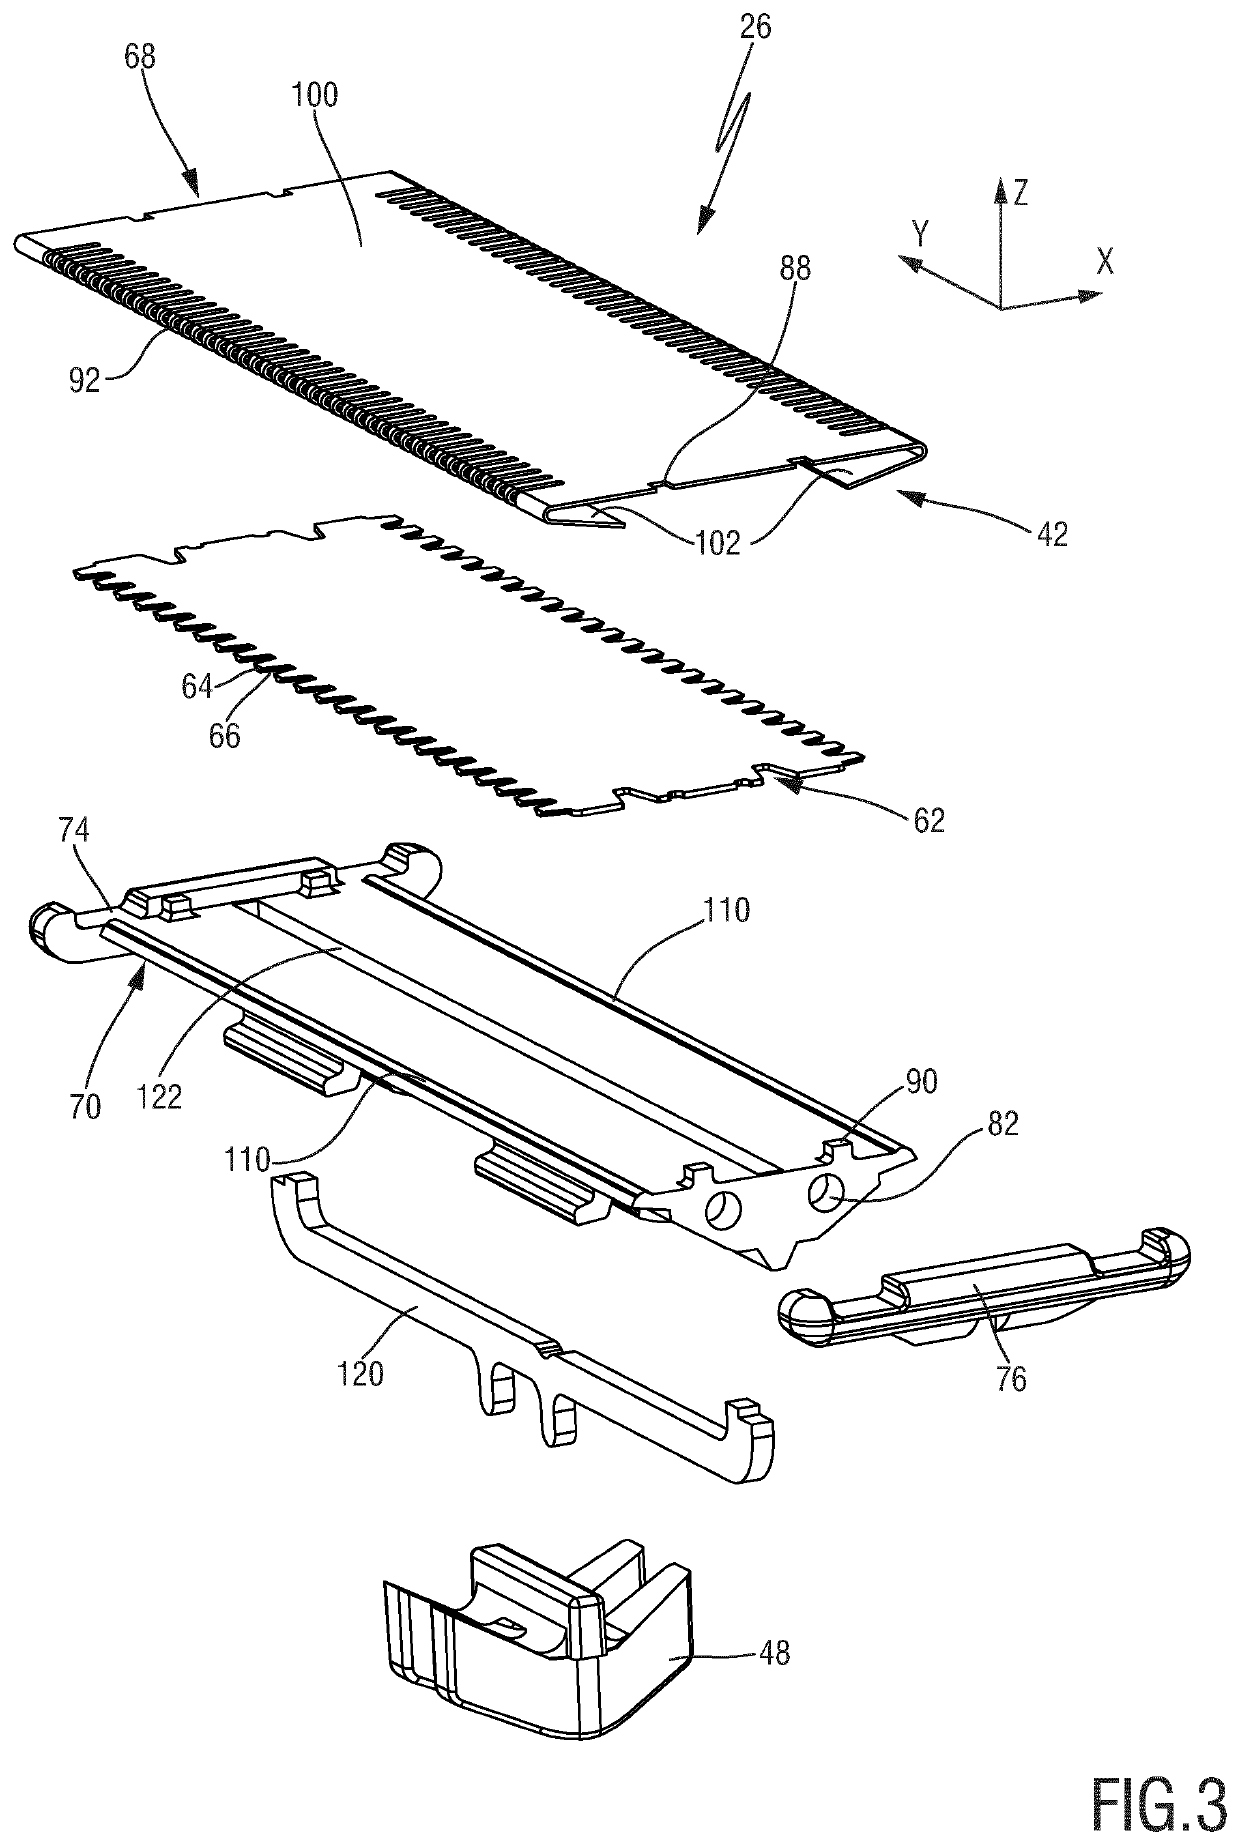 Blade set and manufacturing method